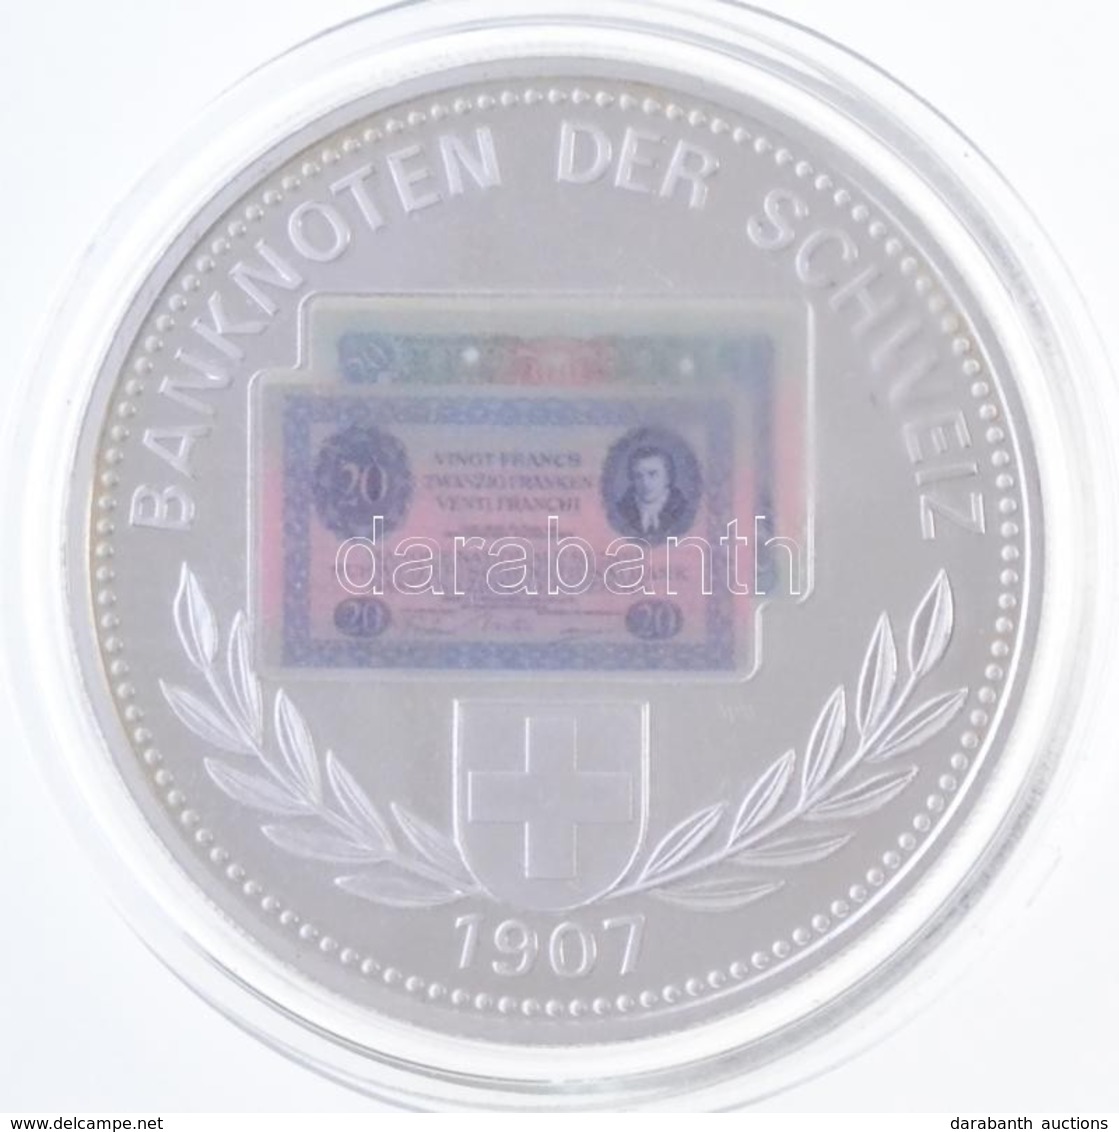 Svájc DN 'Banknoten Der Schweiz 1907 / Billets De Banque De Suisse - Banconote Della Svizzera' Ezüstözött Cu-Ni Emlékére - Non Classificati